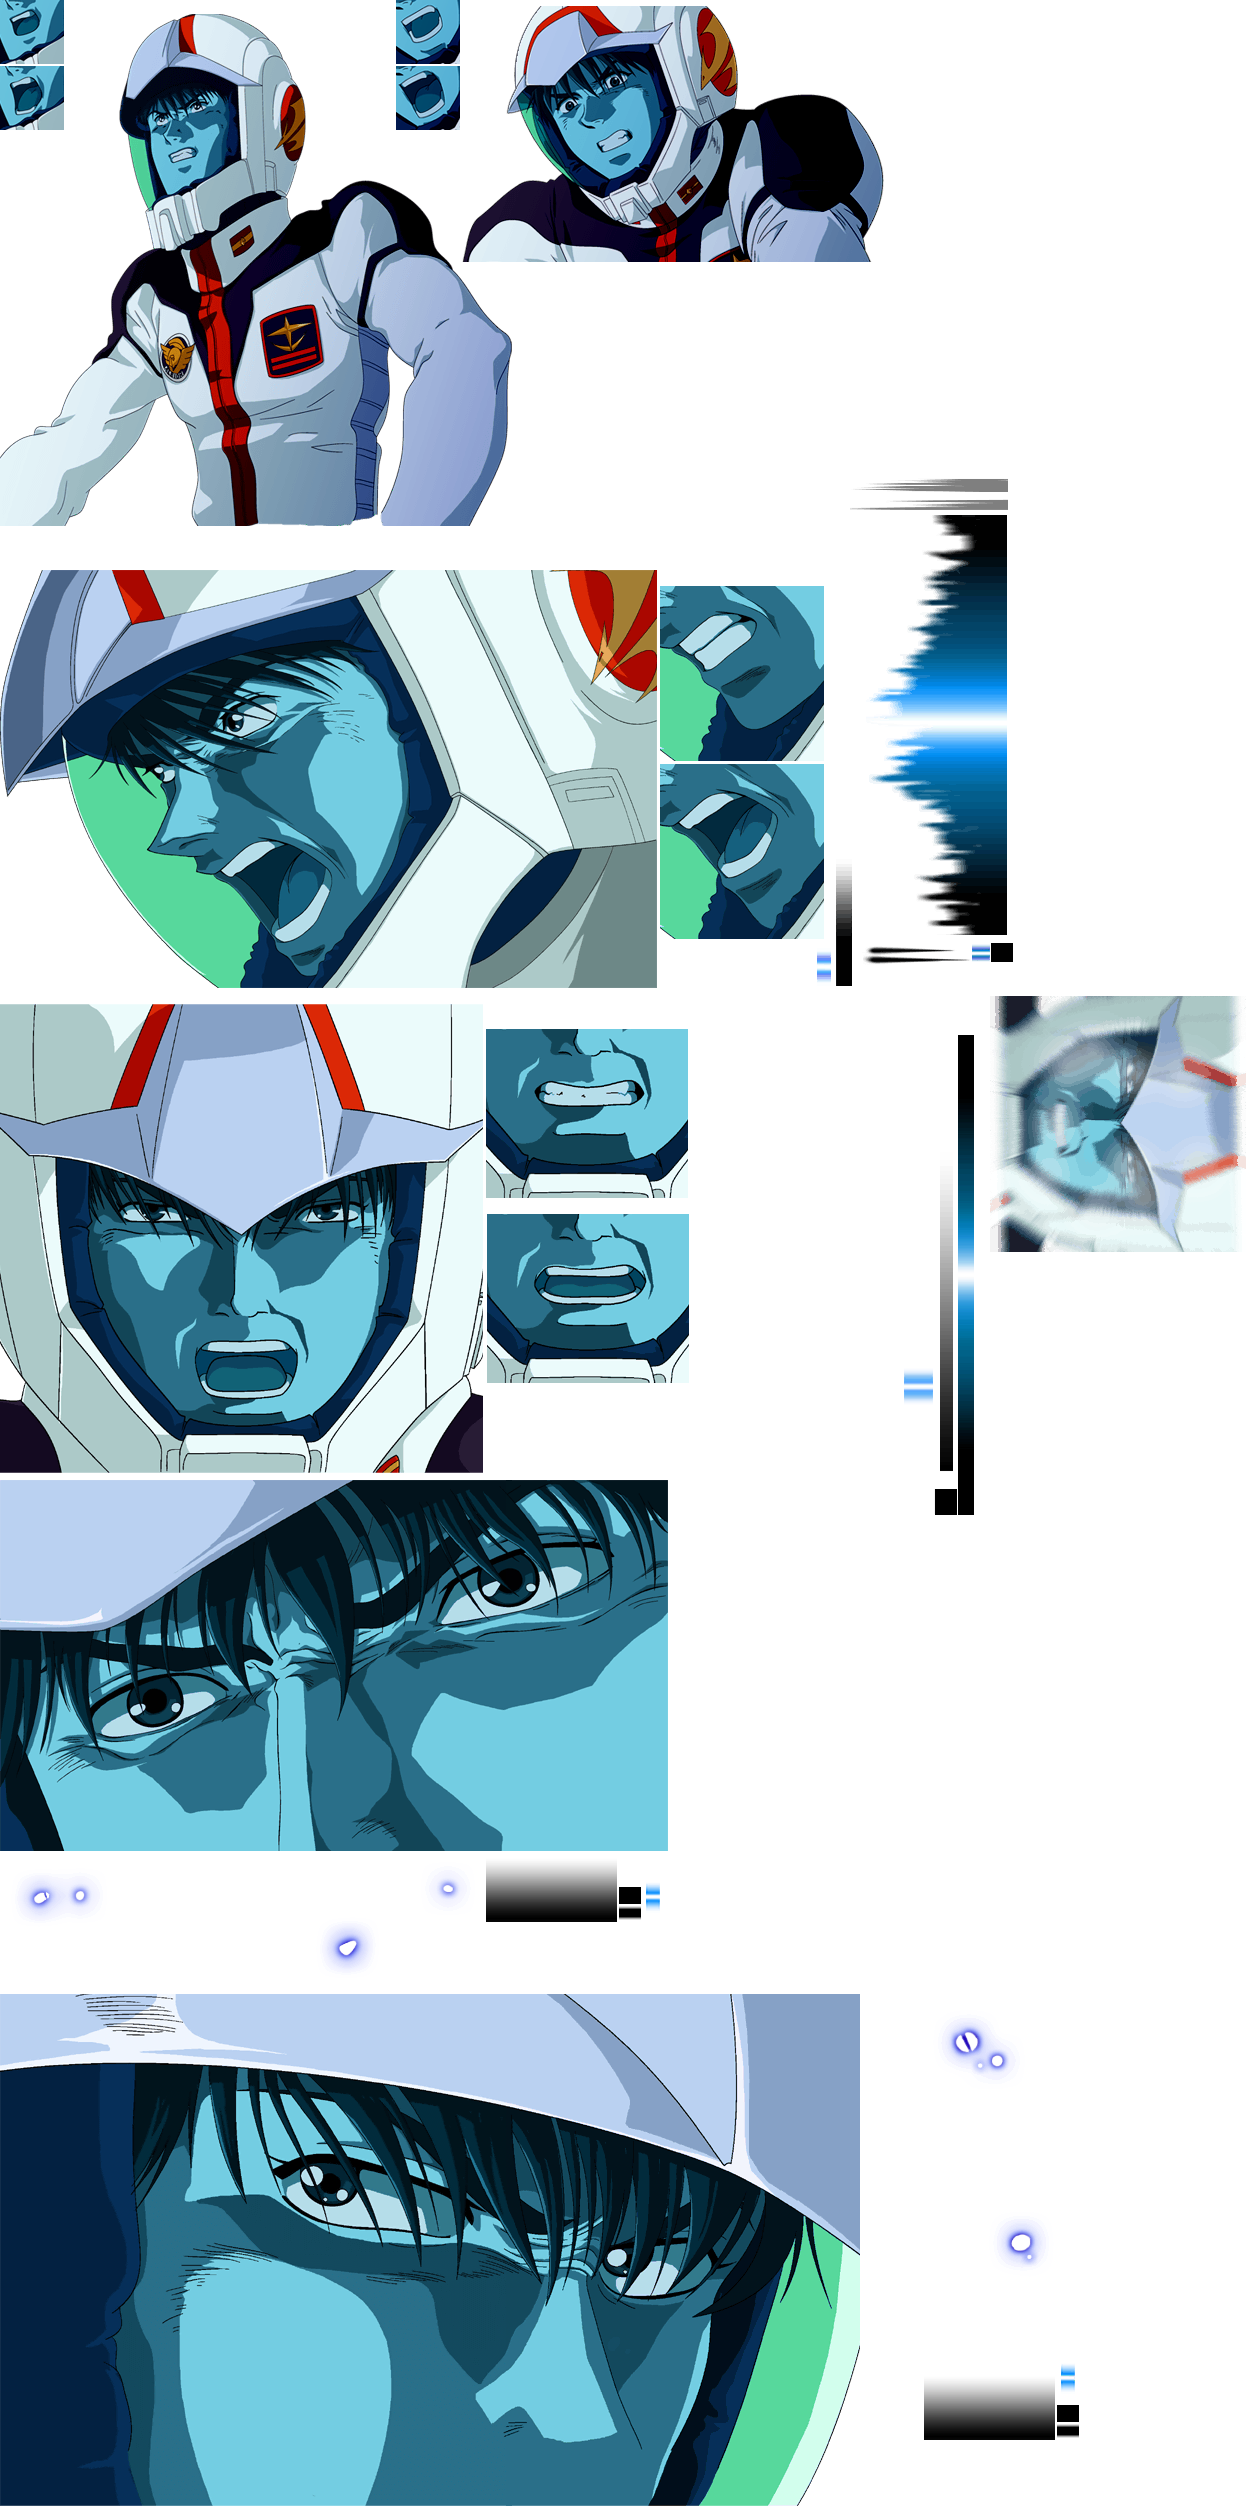 SD Gundam G Generation Wars - Kou Uraki